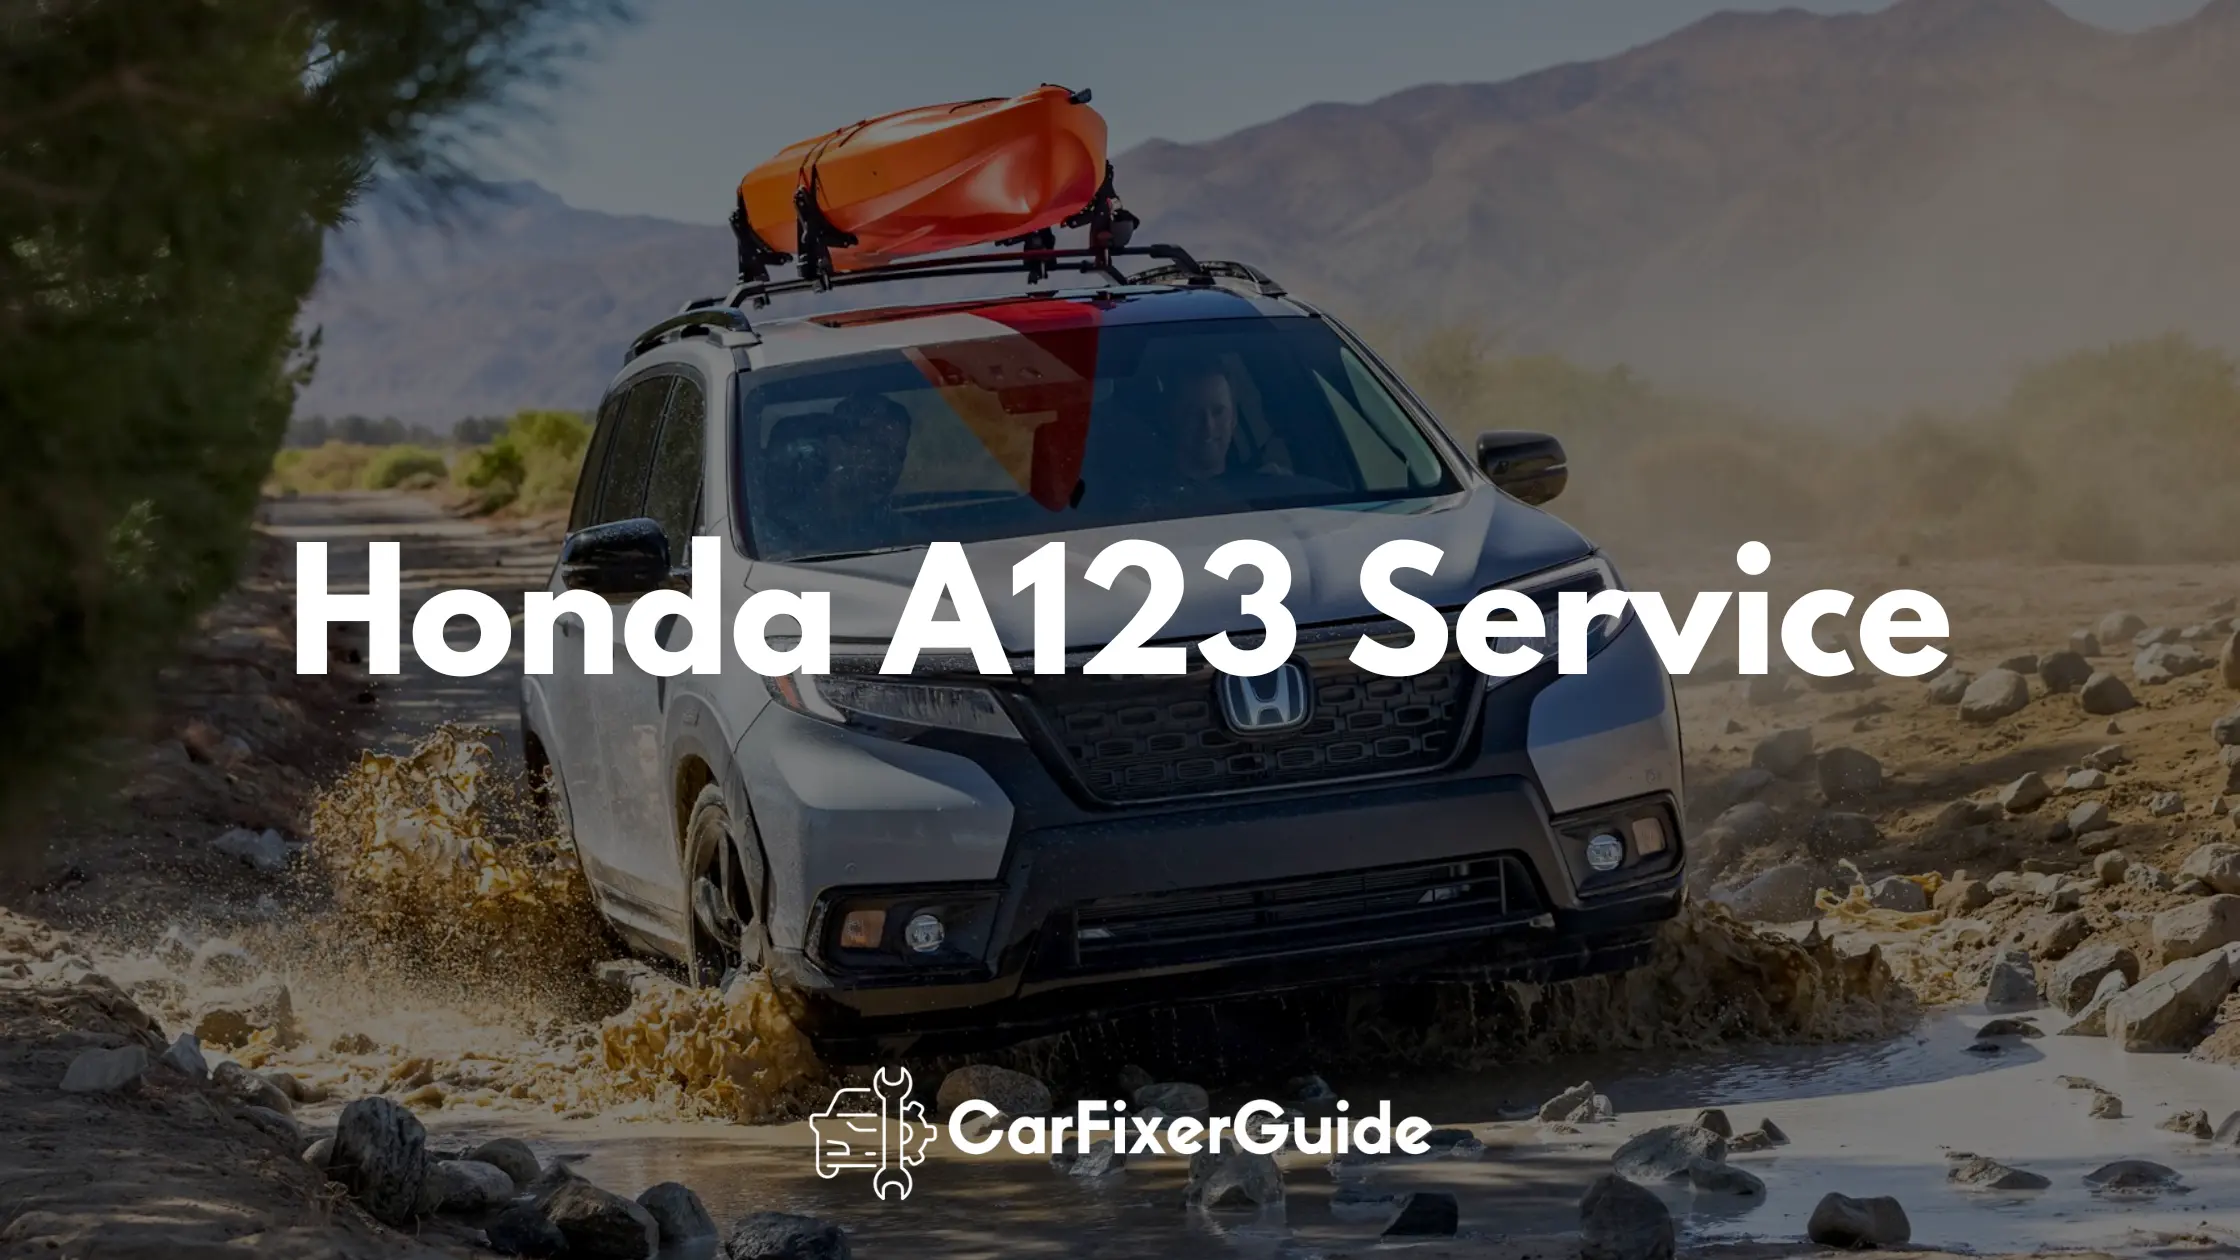 Honda A123 Service